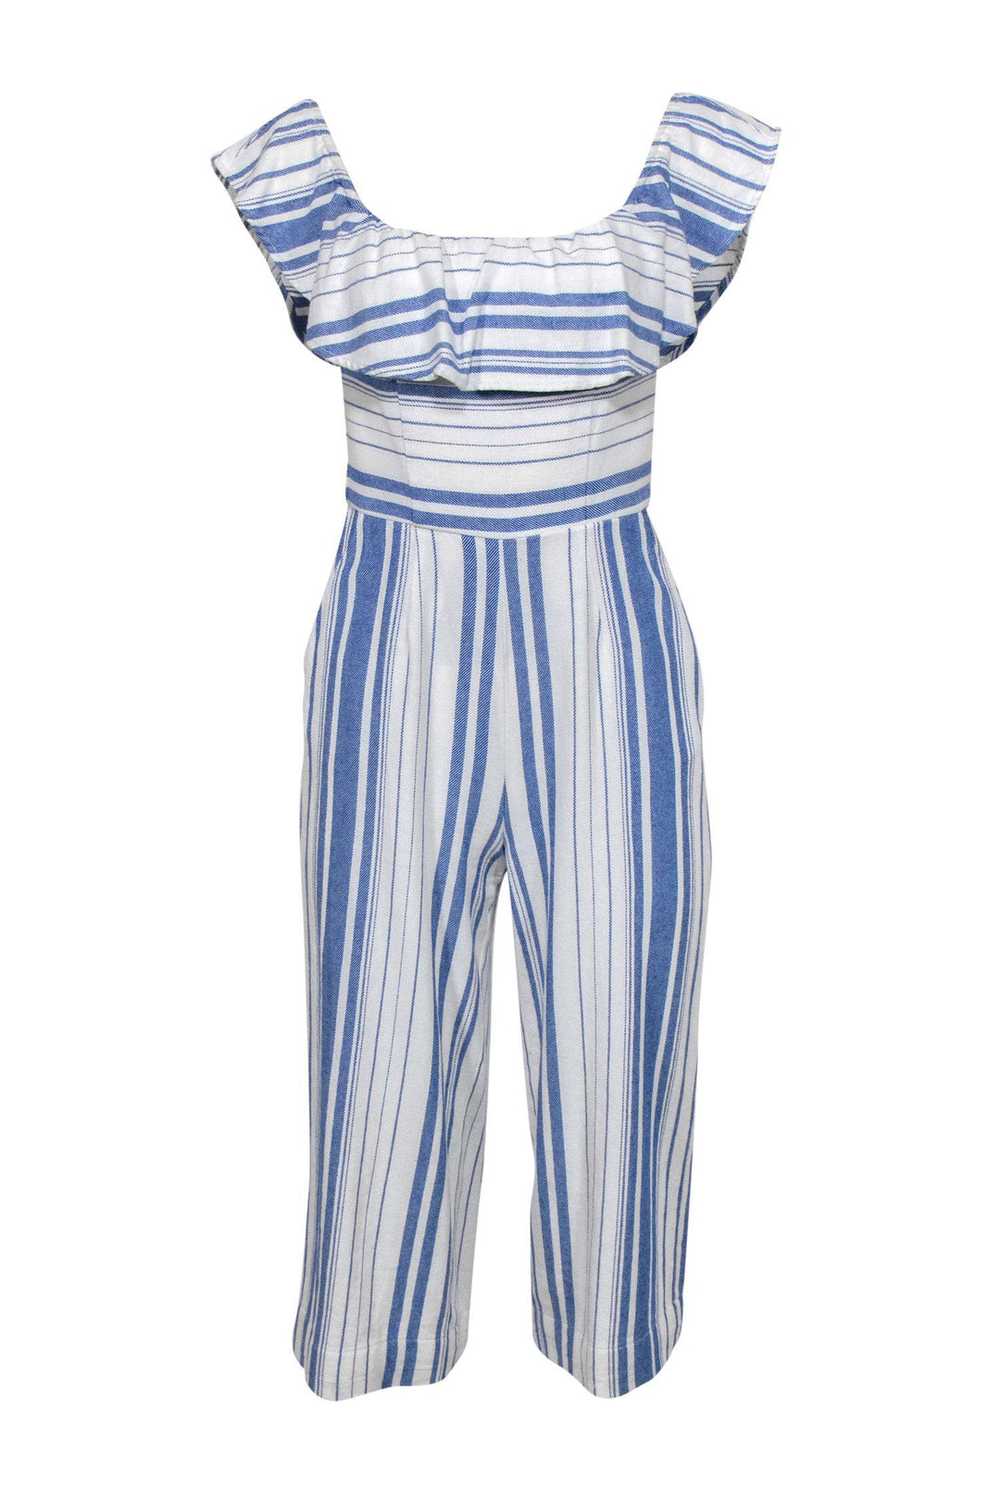 Joie - Blue & White Striped Sleeveless Wide Leg J… - image 1